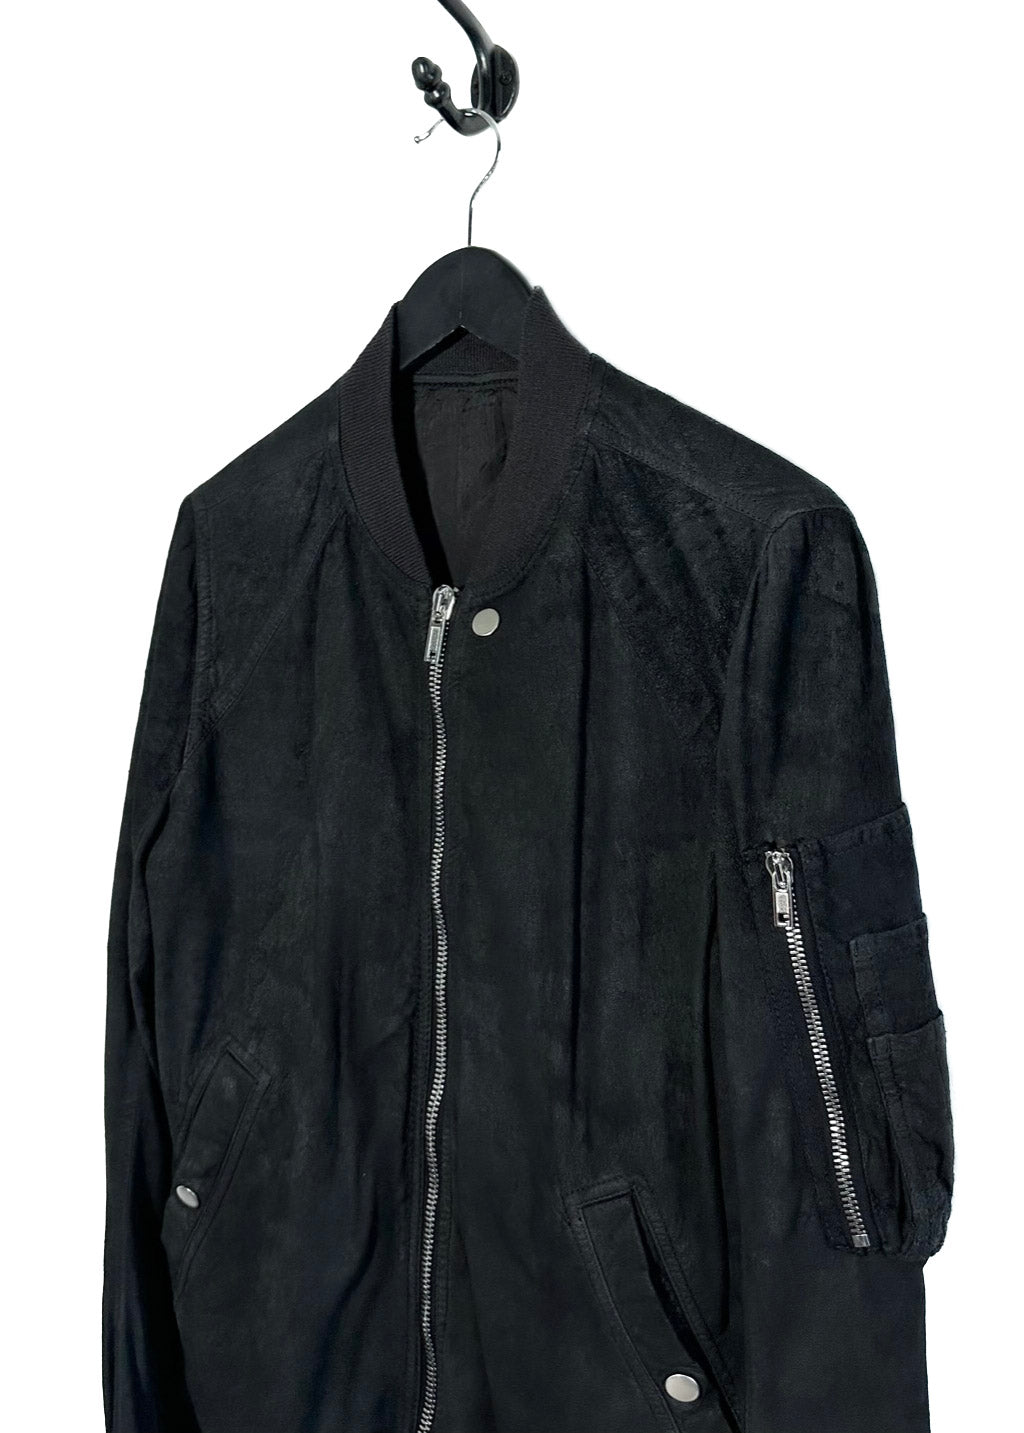 Rick Owens SS18 Dirt Black Lambskin Bomber Jacket